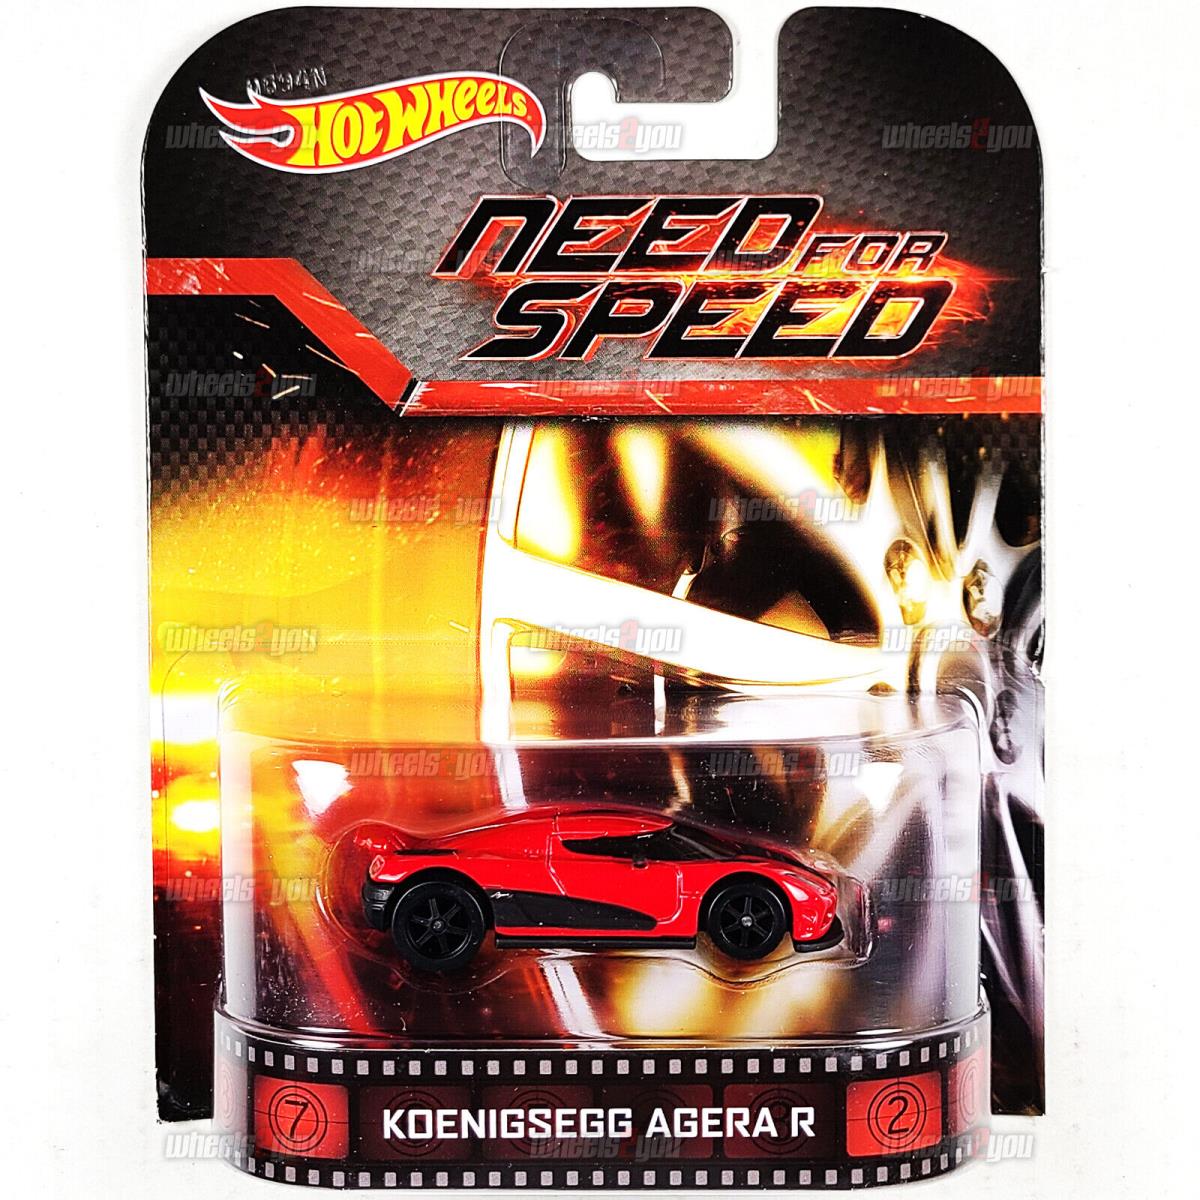 Koenigsegg Agera R Need For Speed - 2014 Hot Wheels Retro Entertainment